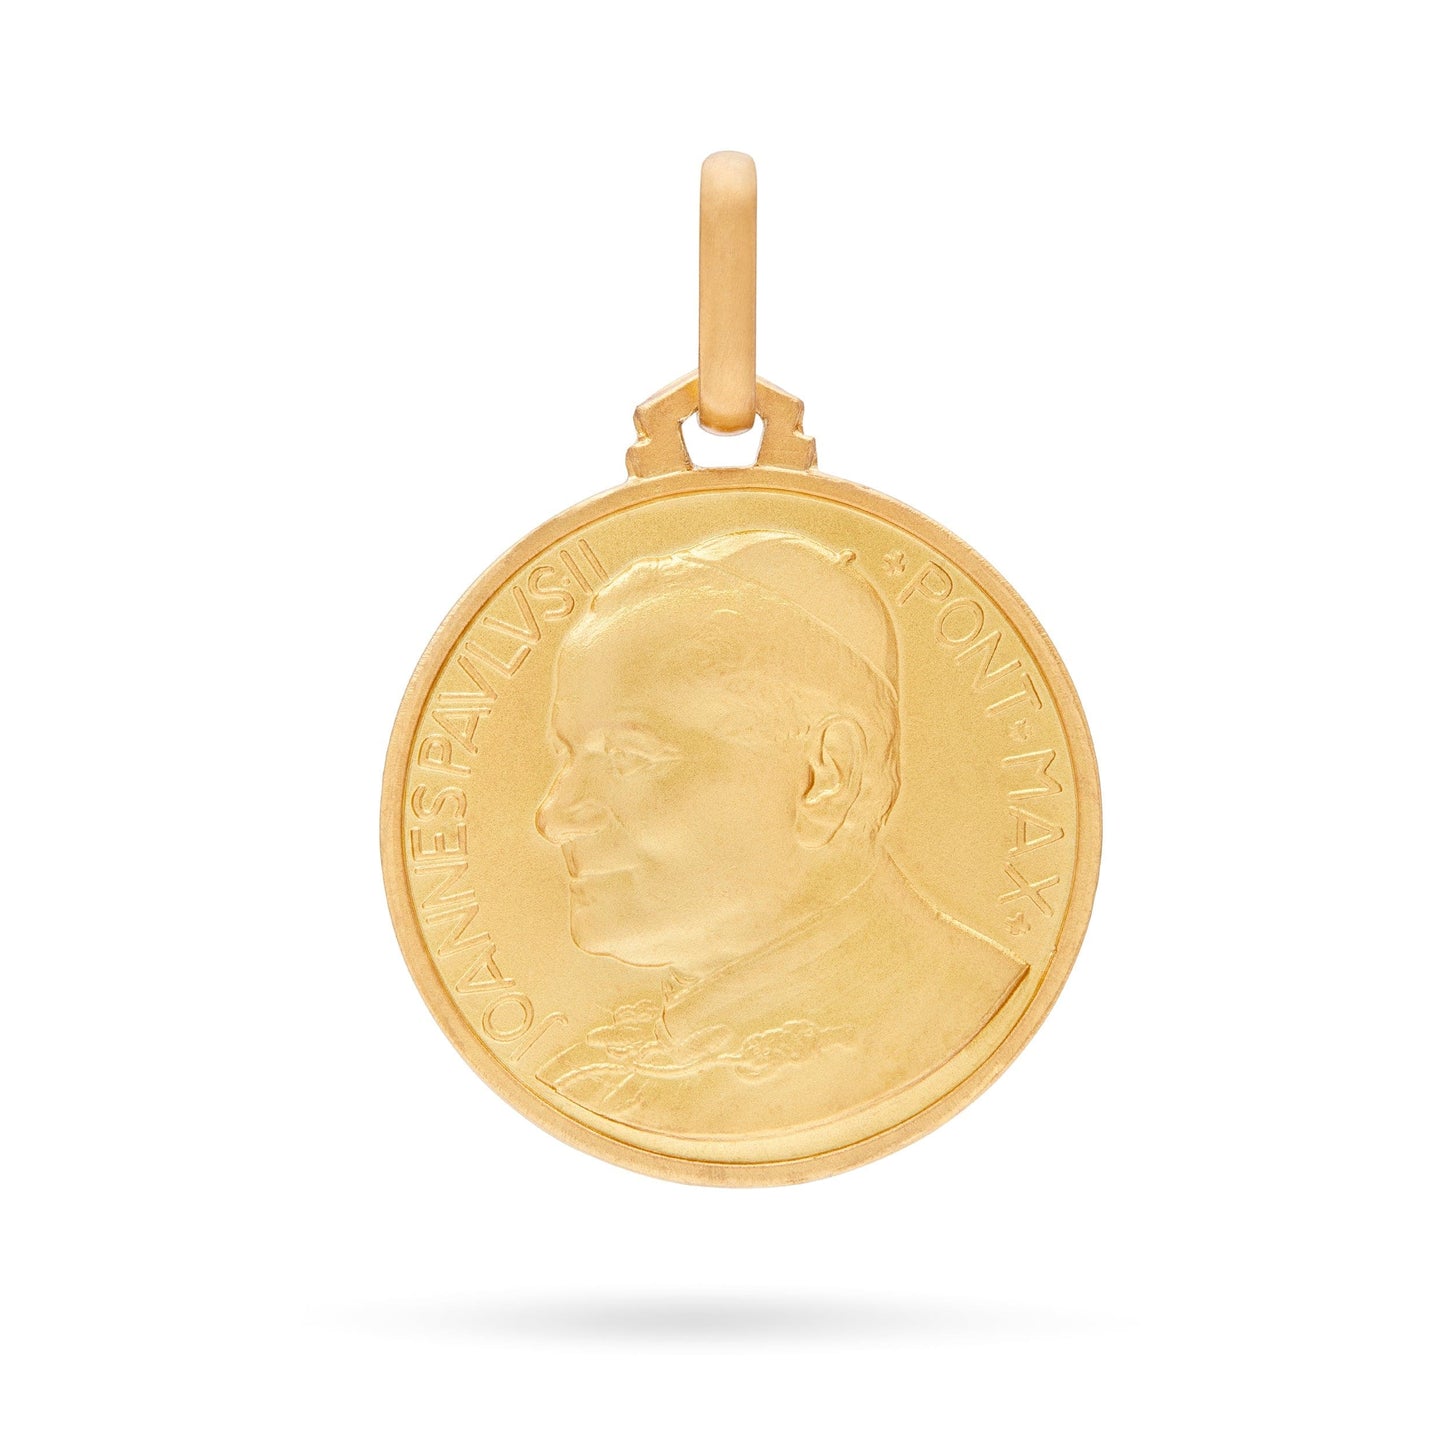 MONDO CATTOLICO Jewelry 21 mm (0.82 in) Gold Medal Saint John Paul II Canonization